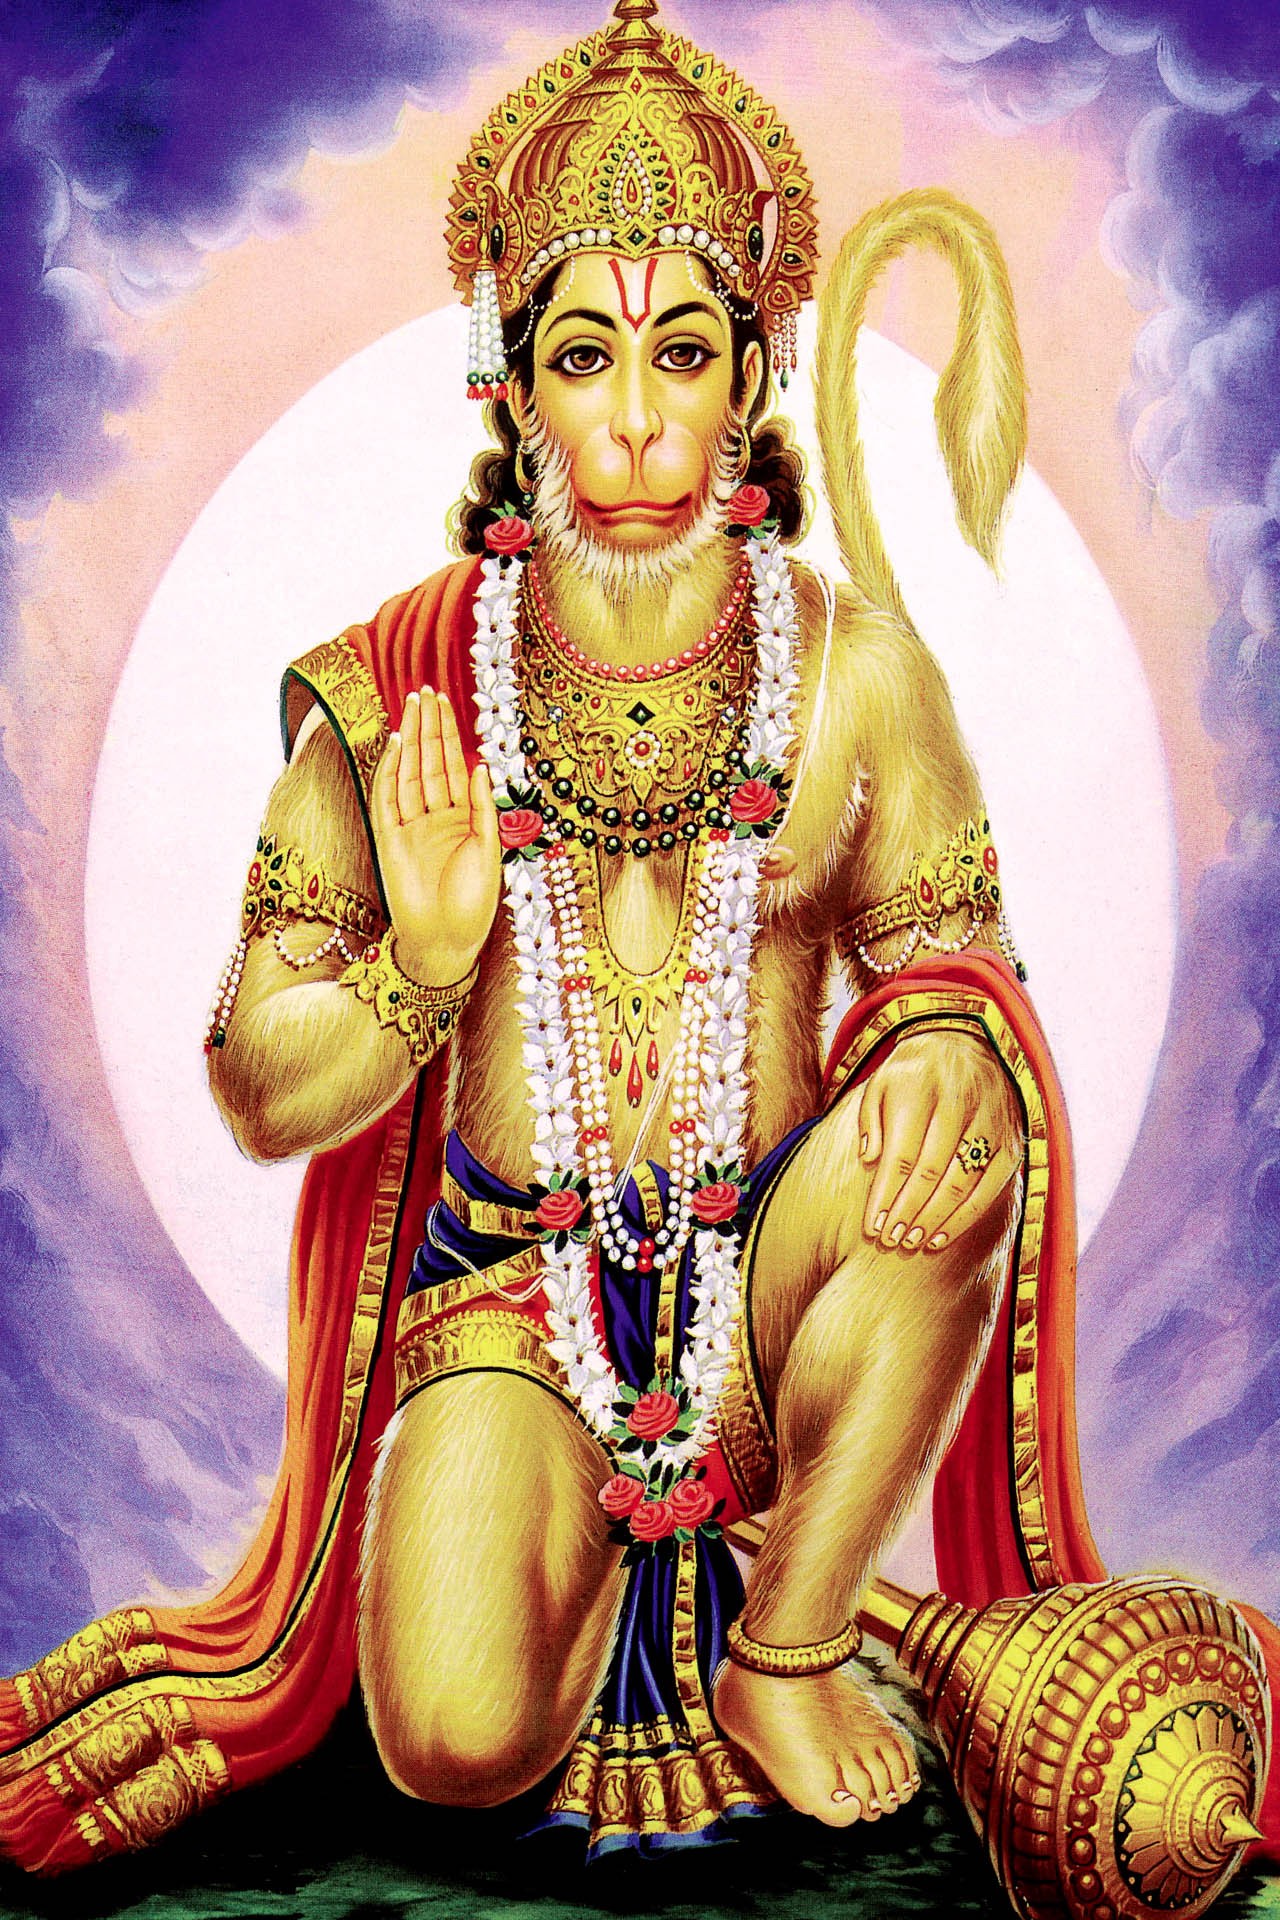 Lord Hanuman - Image